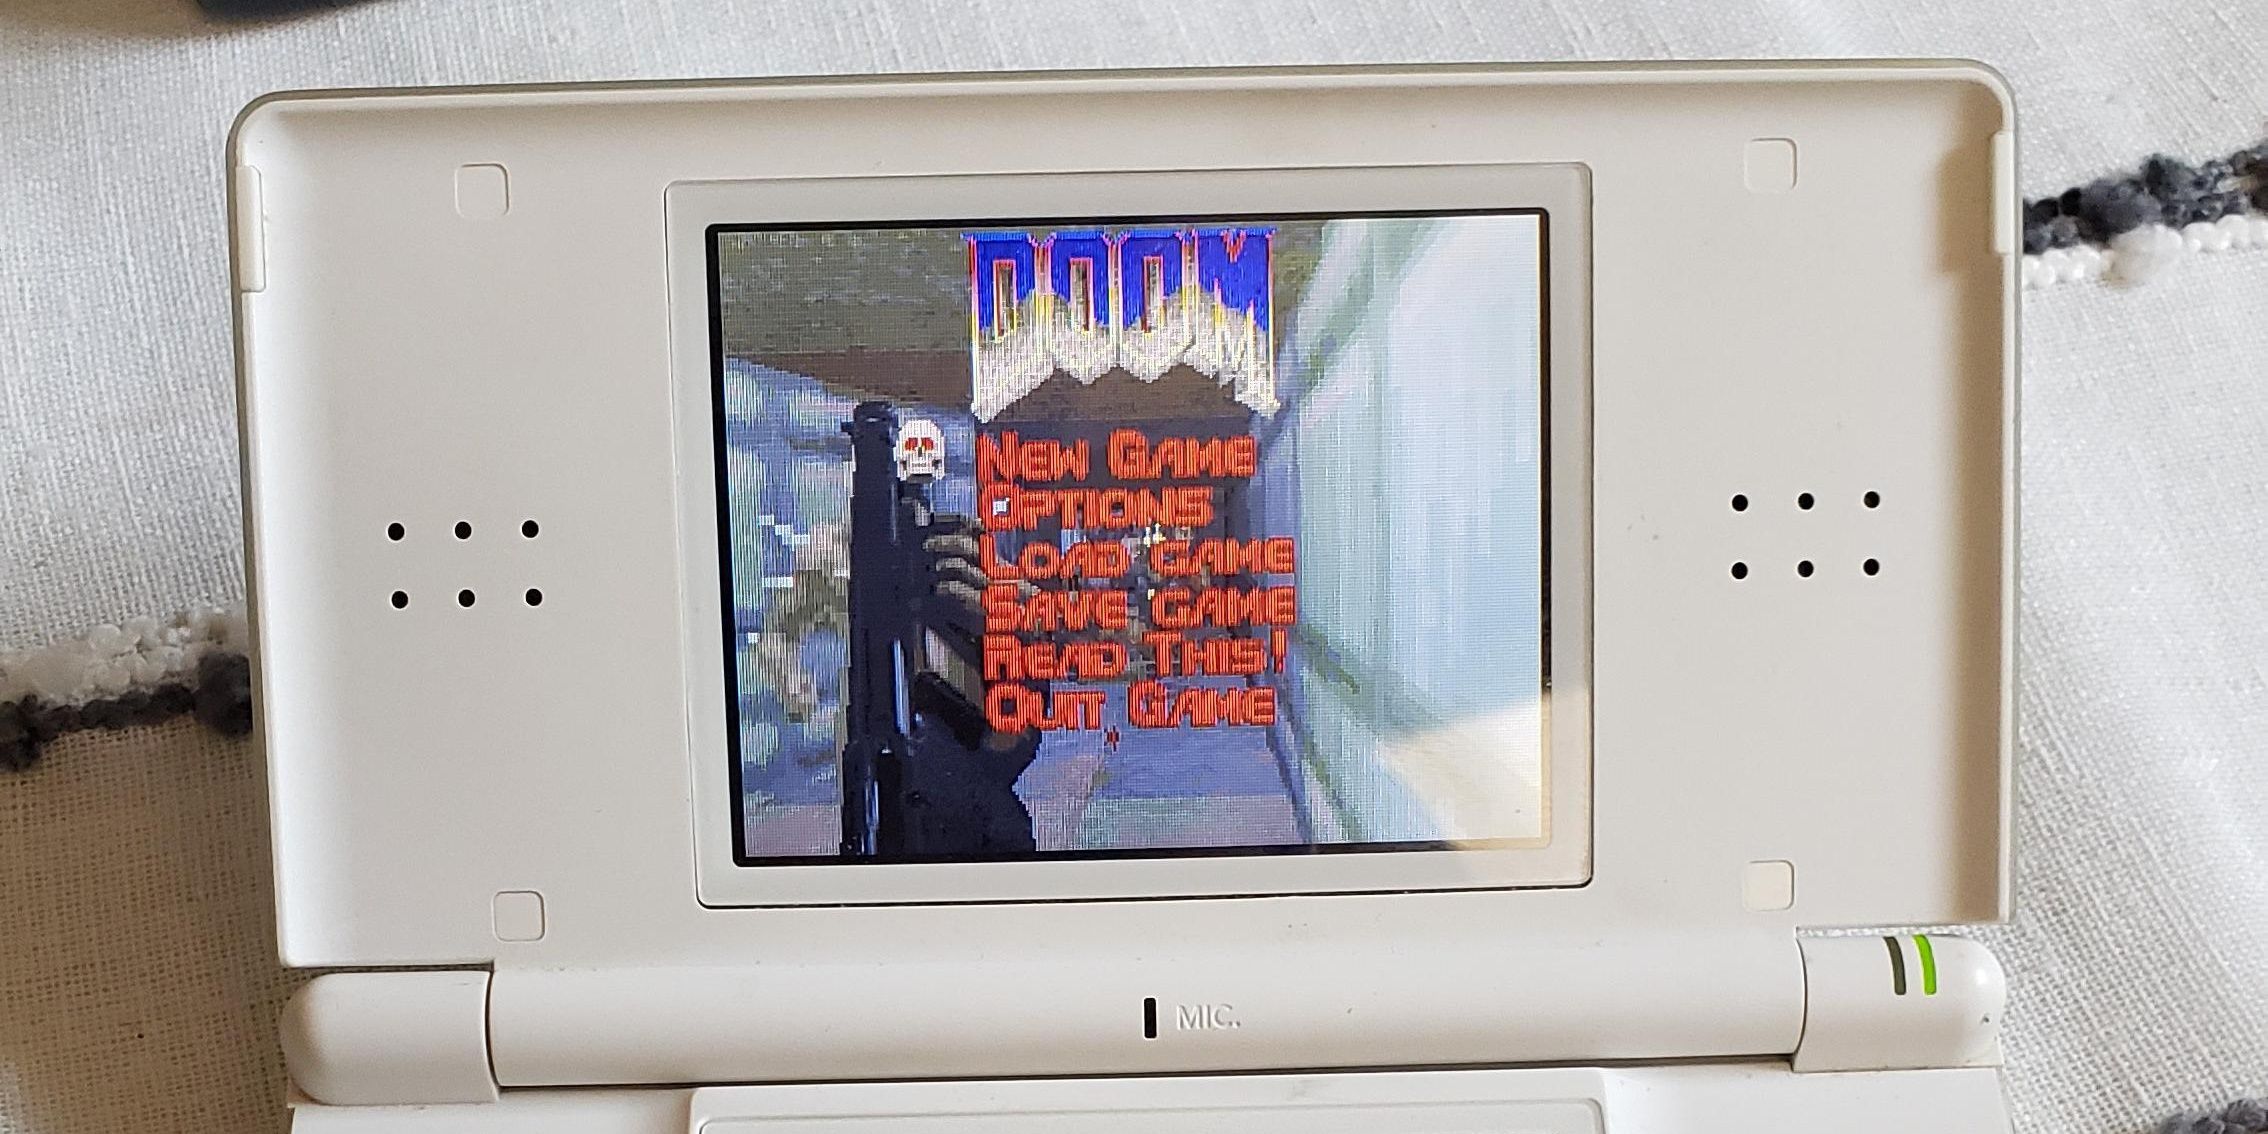 Nintendo DS running Doom